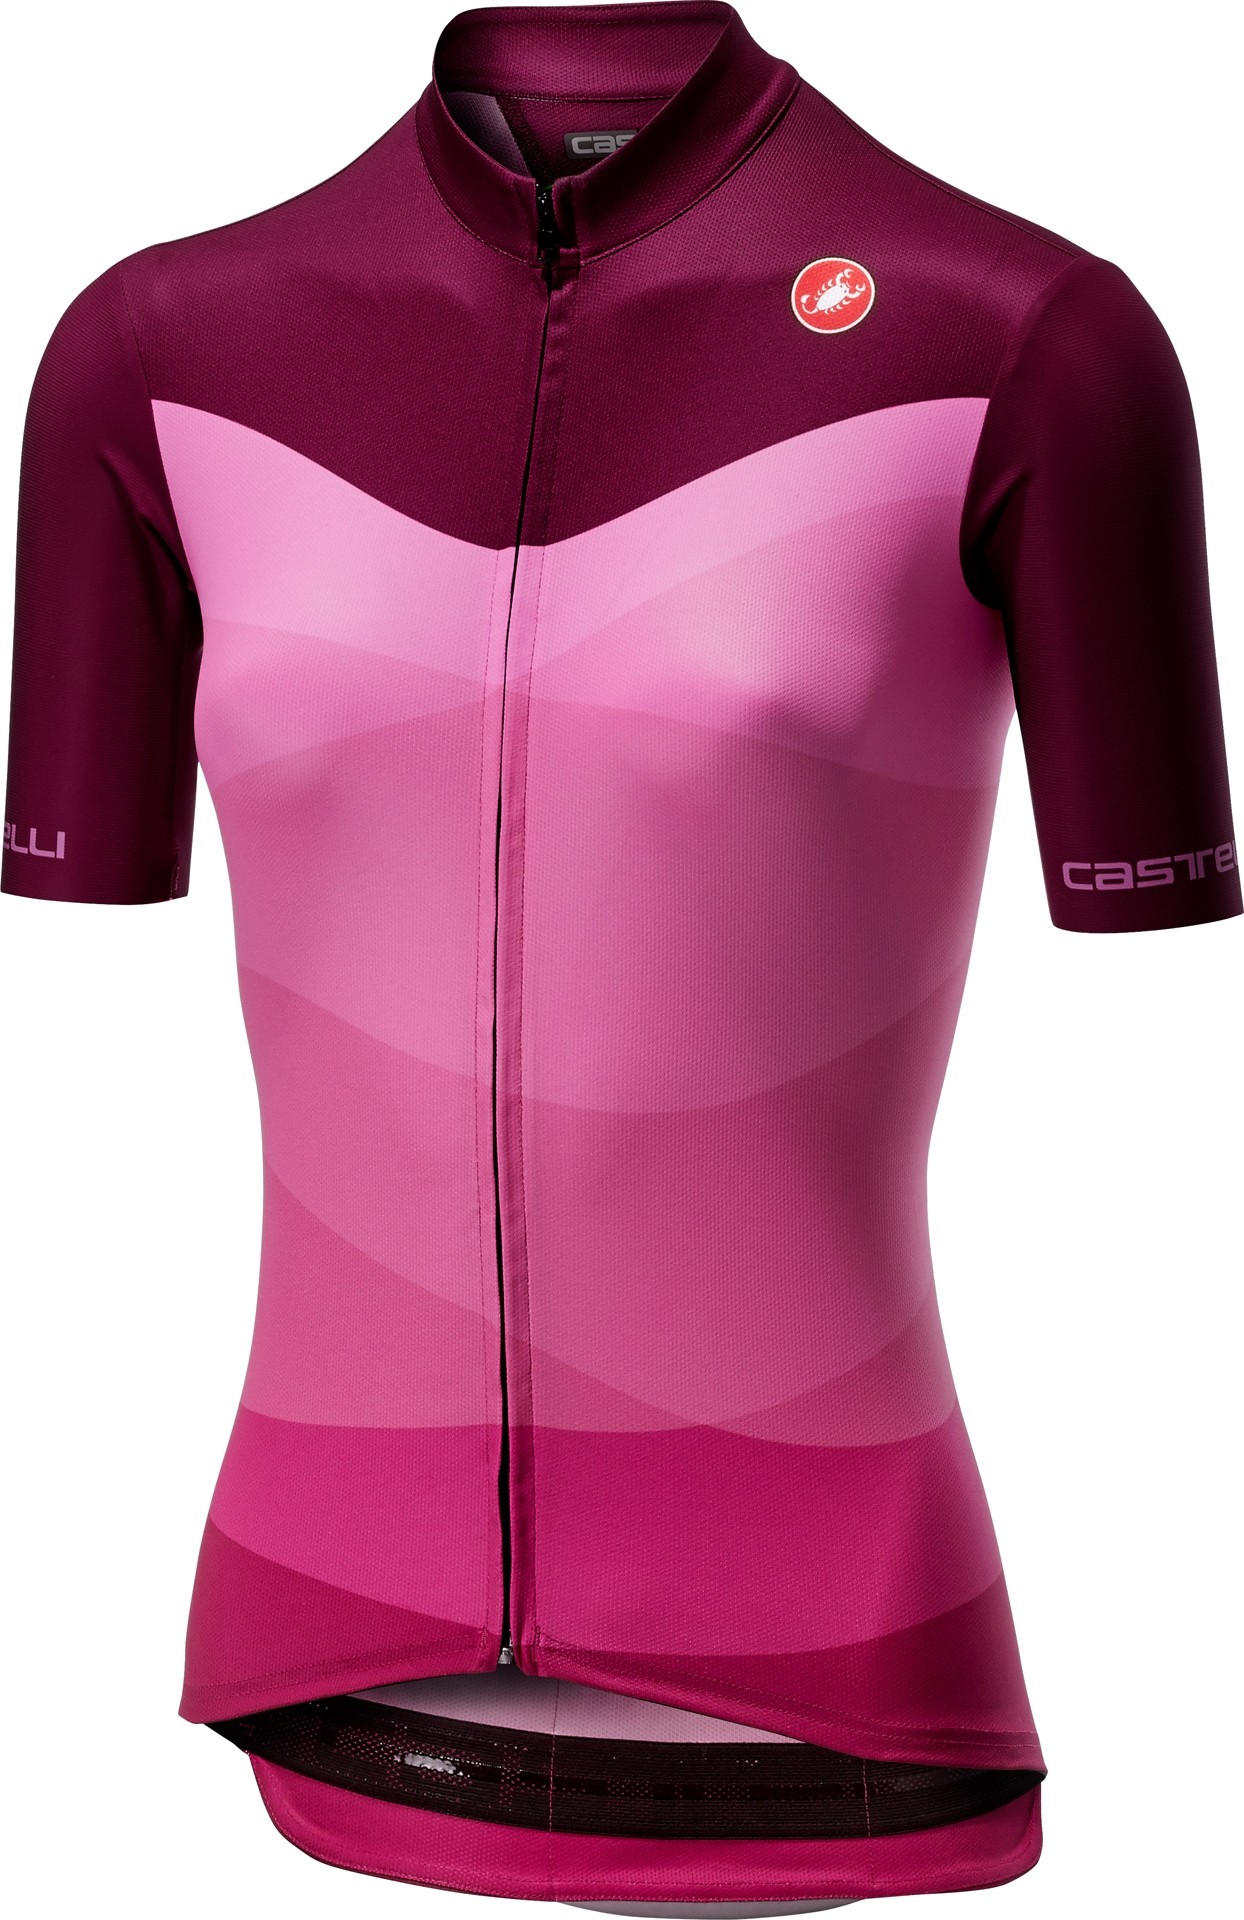 Castelli tabula rasa maillot de cyclisme manches courtes femme onda cyclamen rose